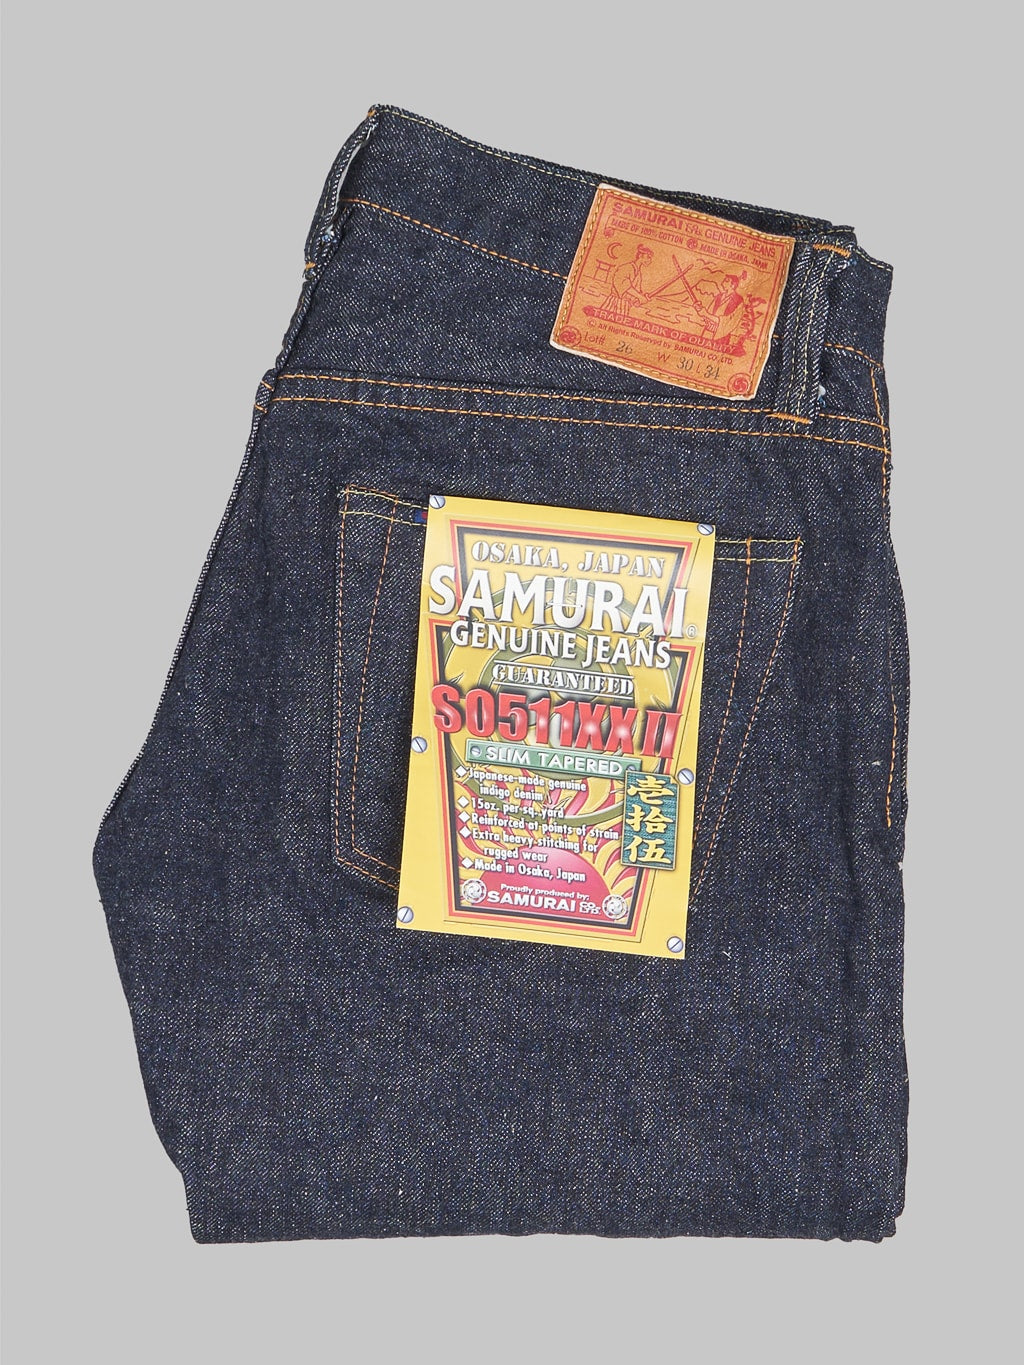 samurai s0511xxii texas cotton slim tapered jeans made in okayama